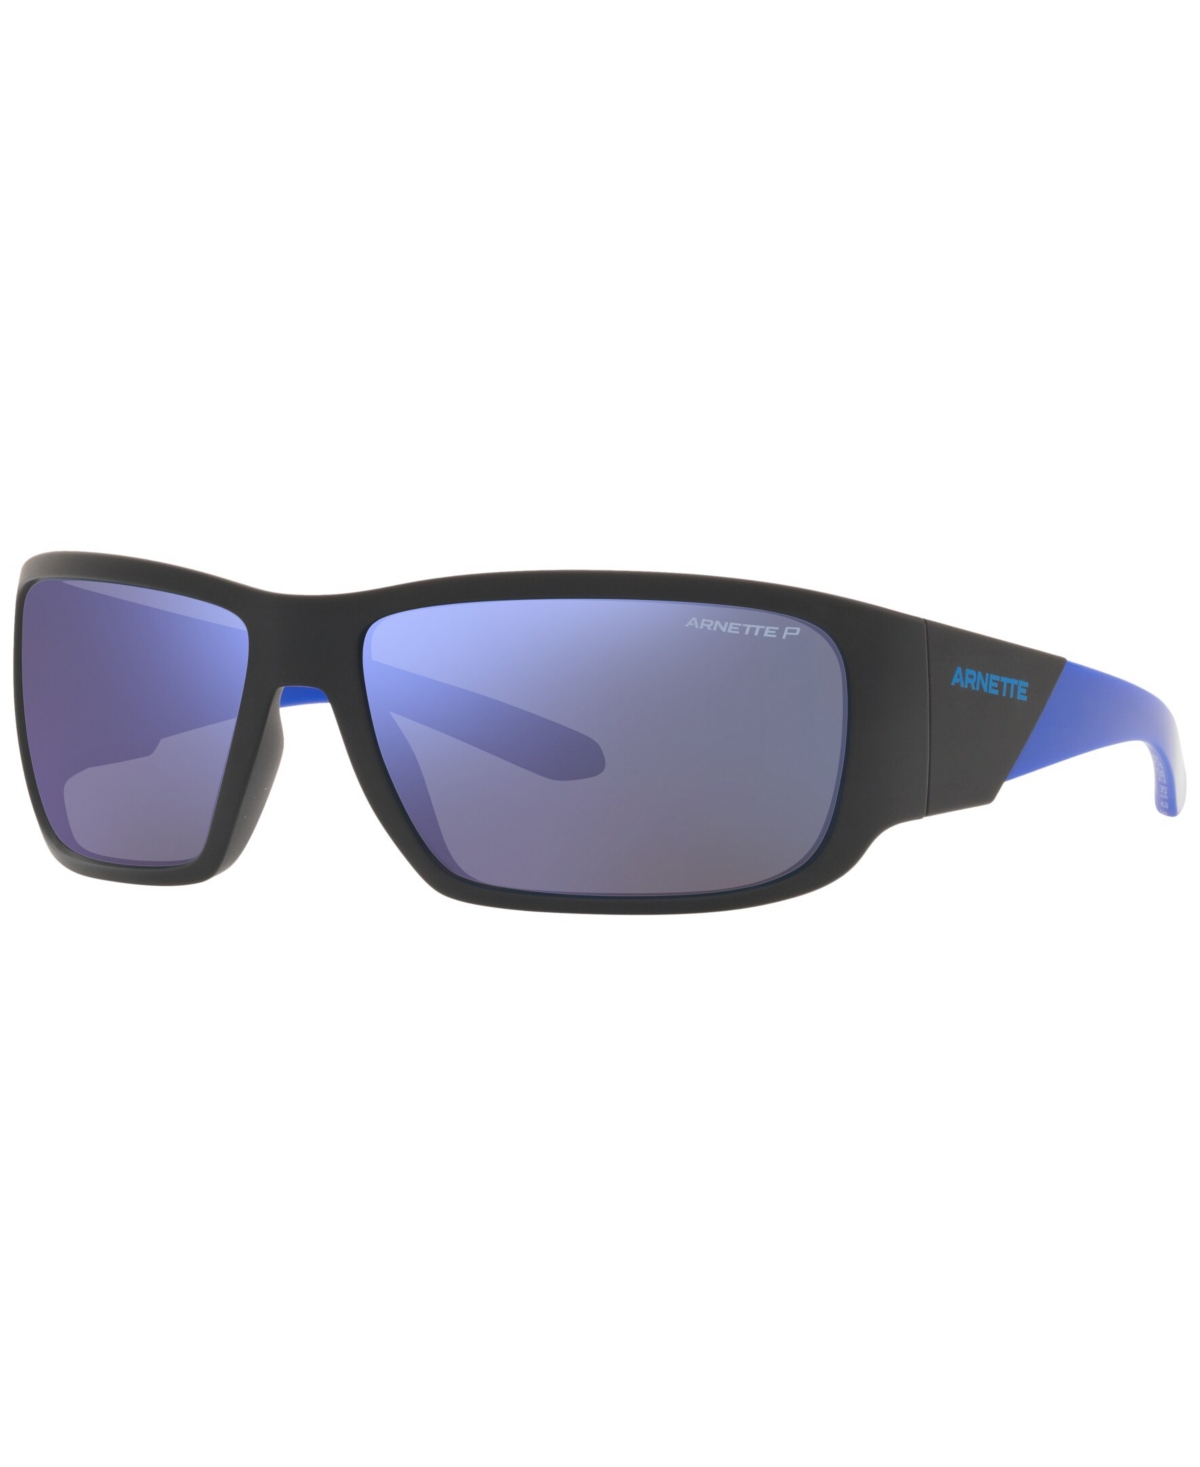 Arnette Unisex Polarized Sunglasses, AN4297 Snap Ii 64